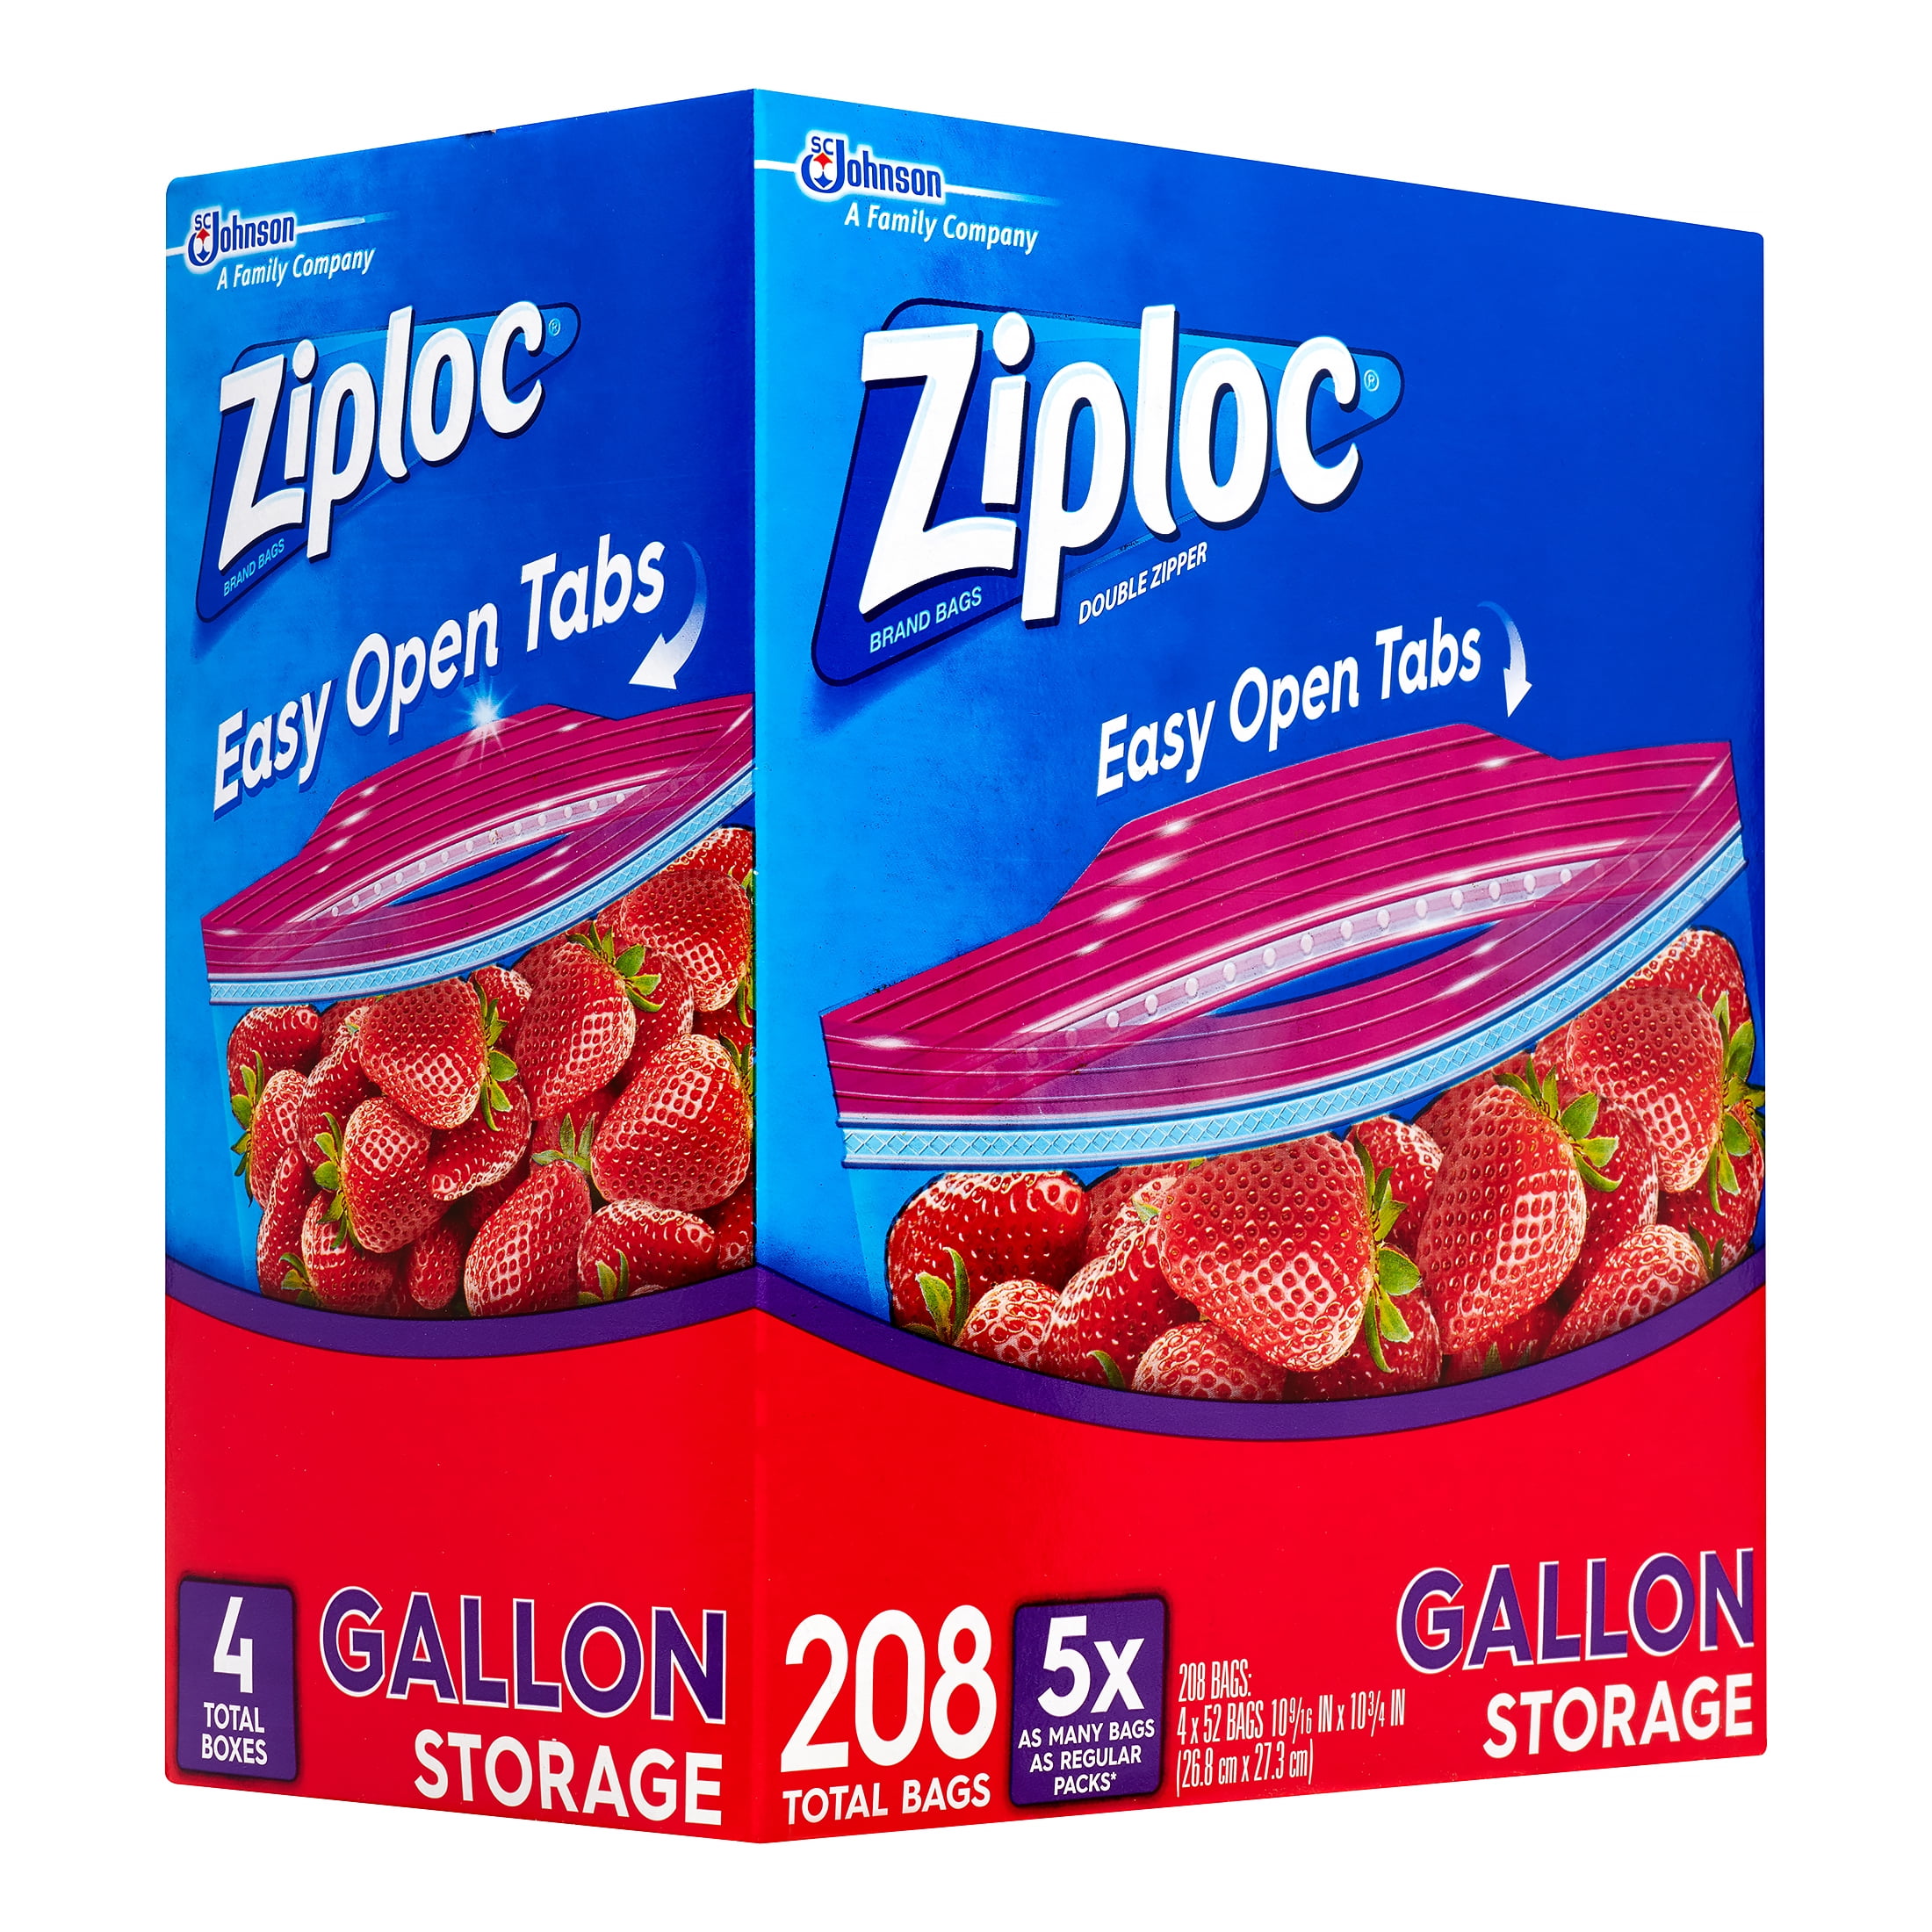 Ziploc, 12451-10019800707641, 1 Gallon Double Zipper Storage Bag